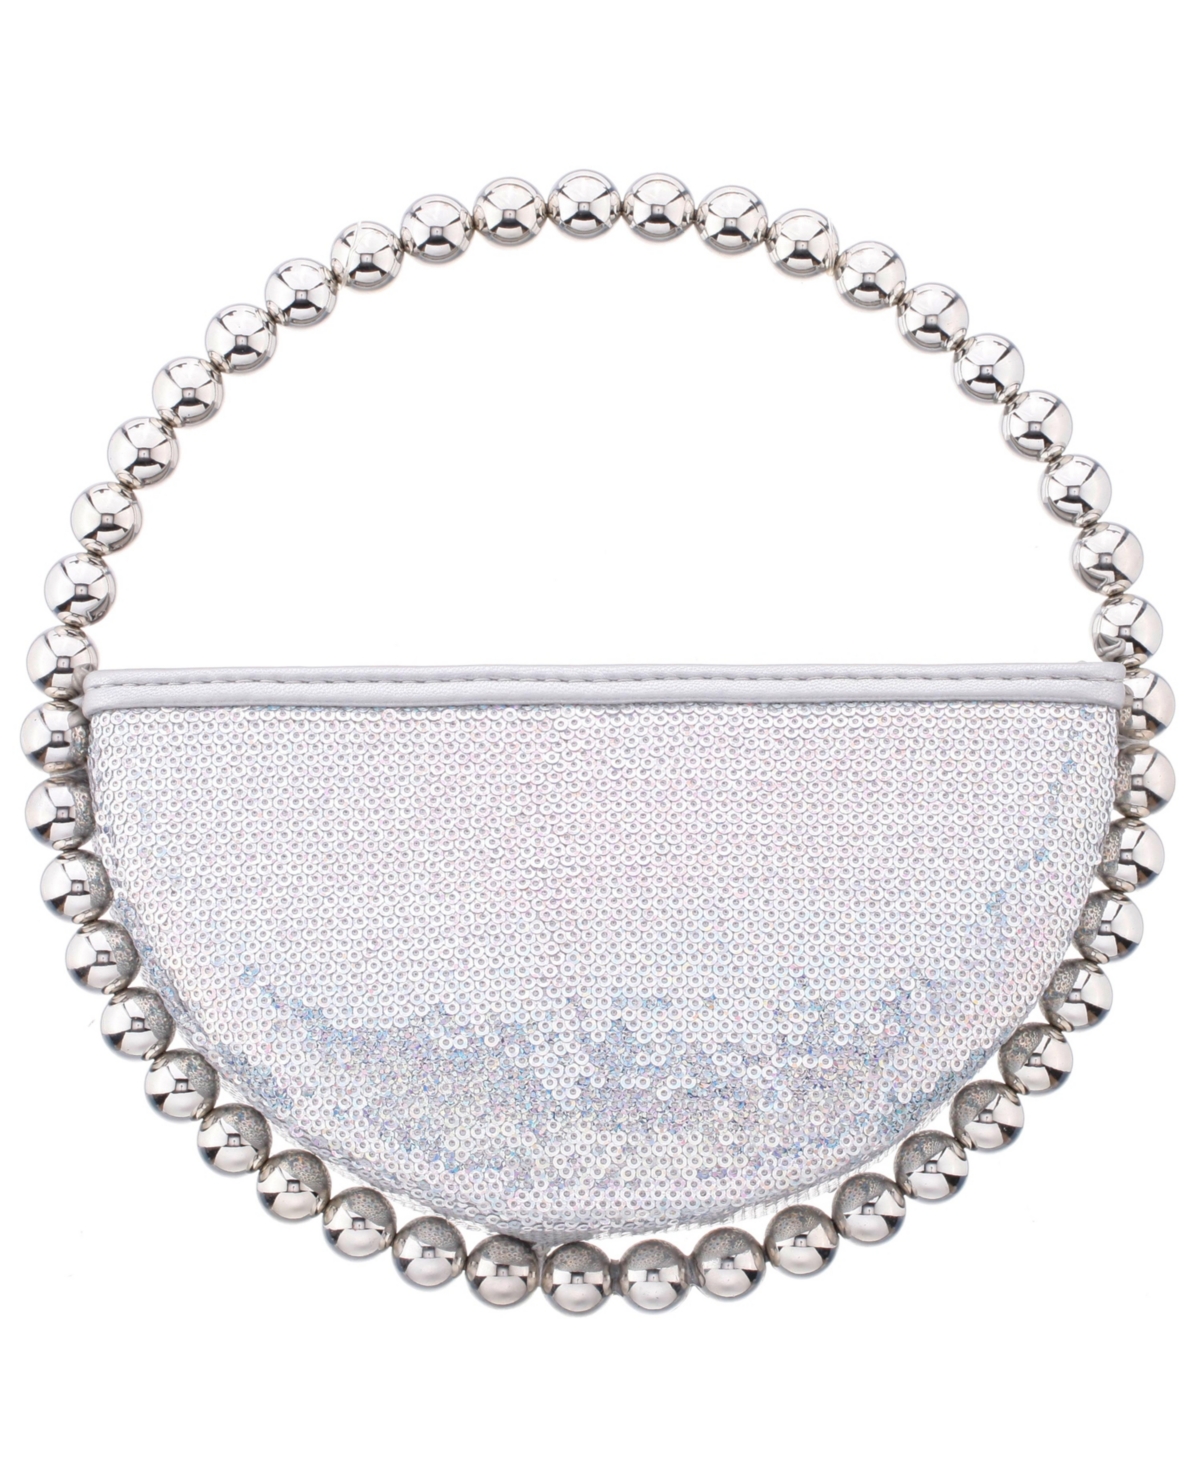 Sequin Circle Bag with Metallic Bead Handle - Silver Ab